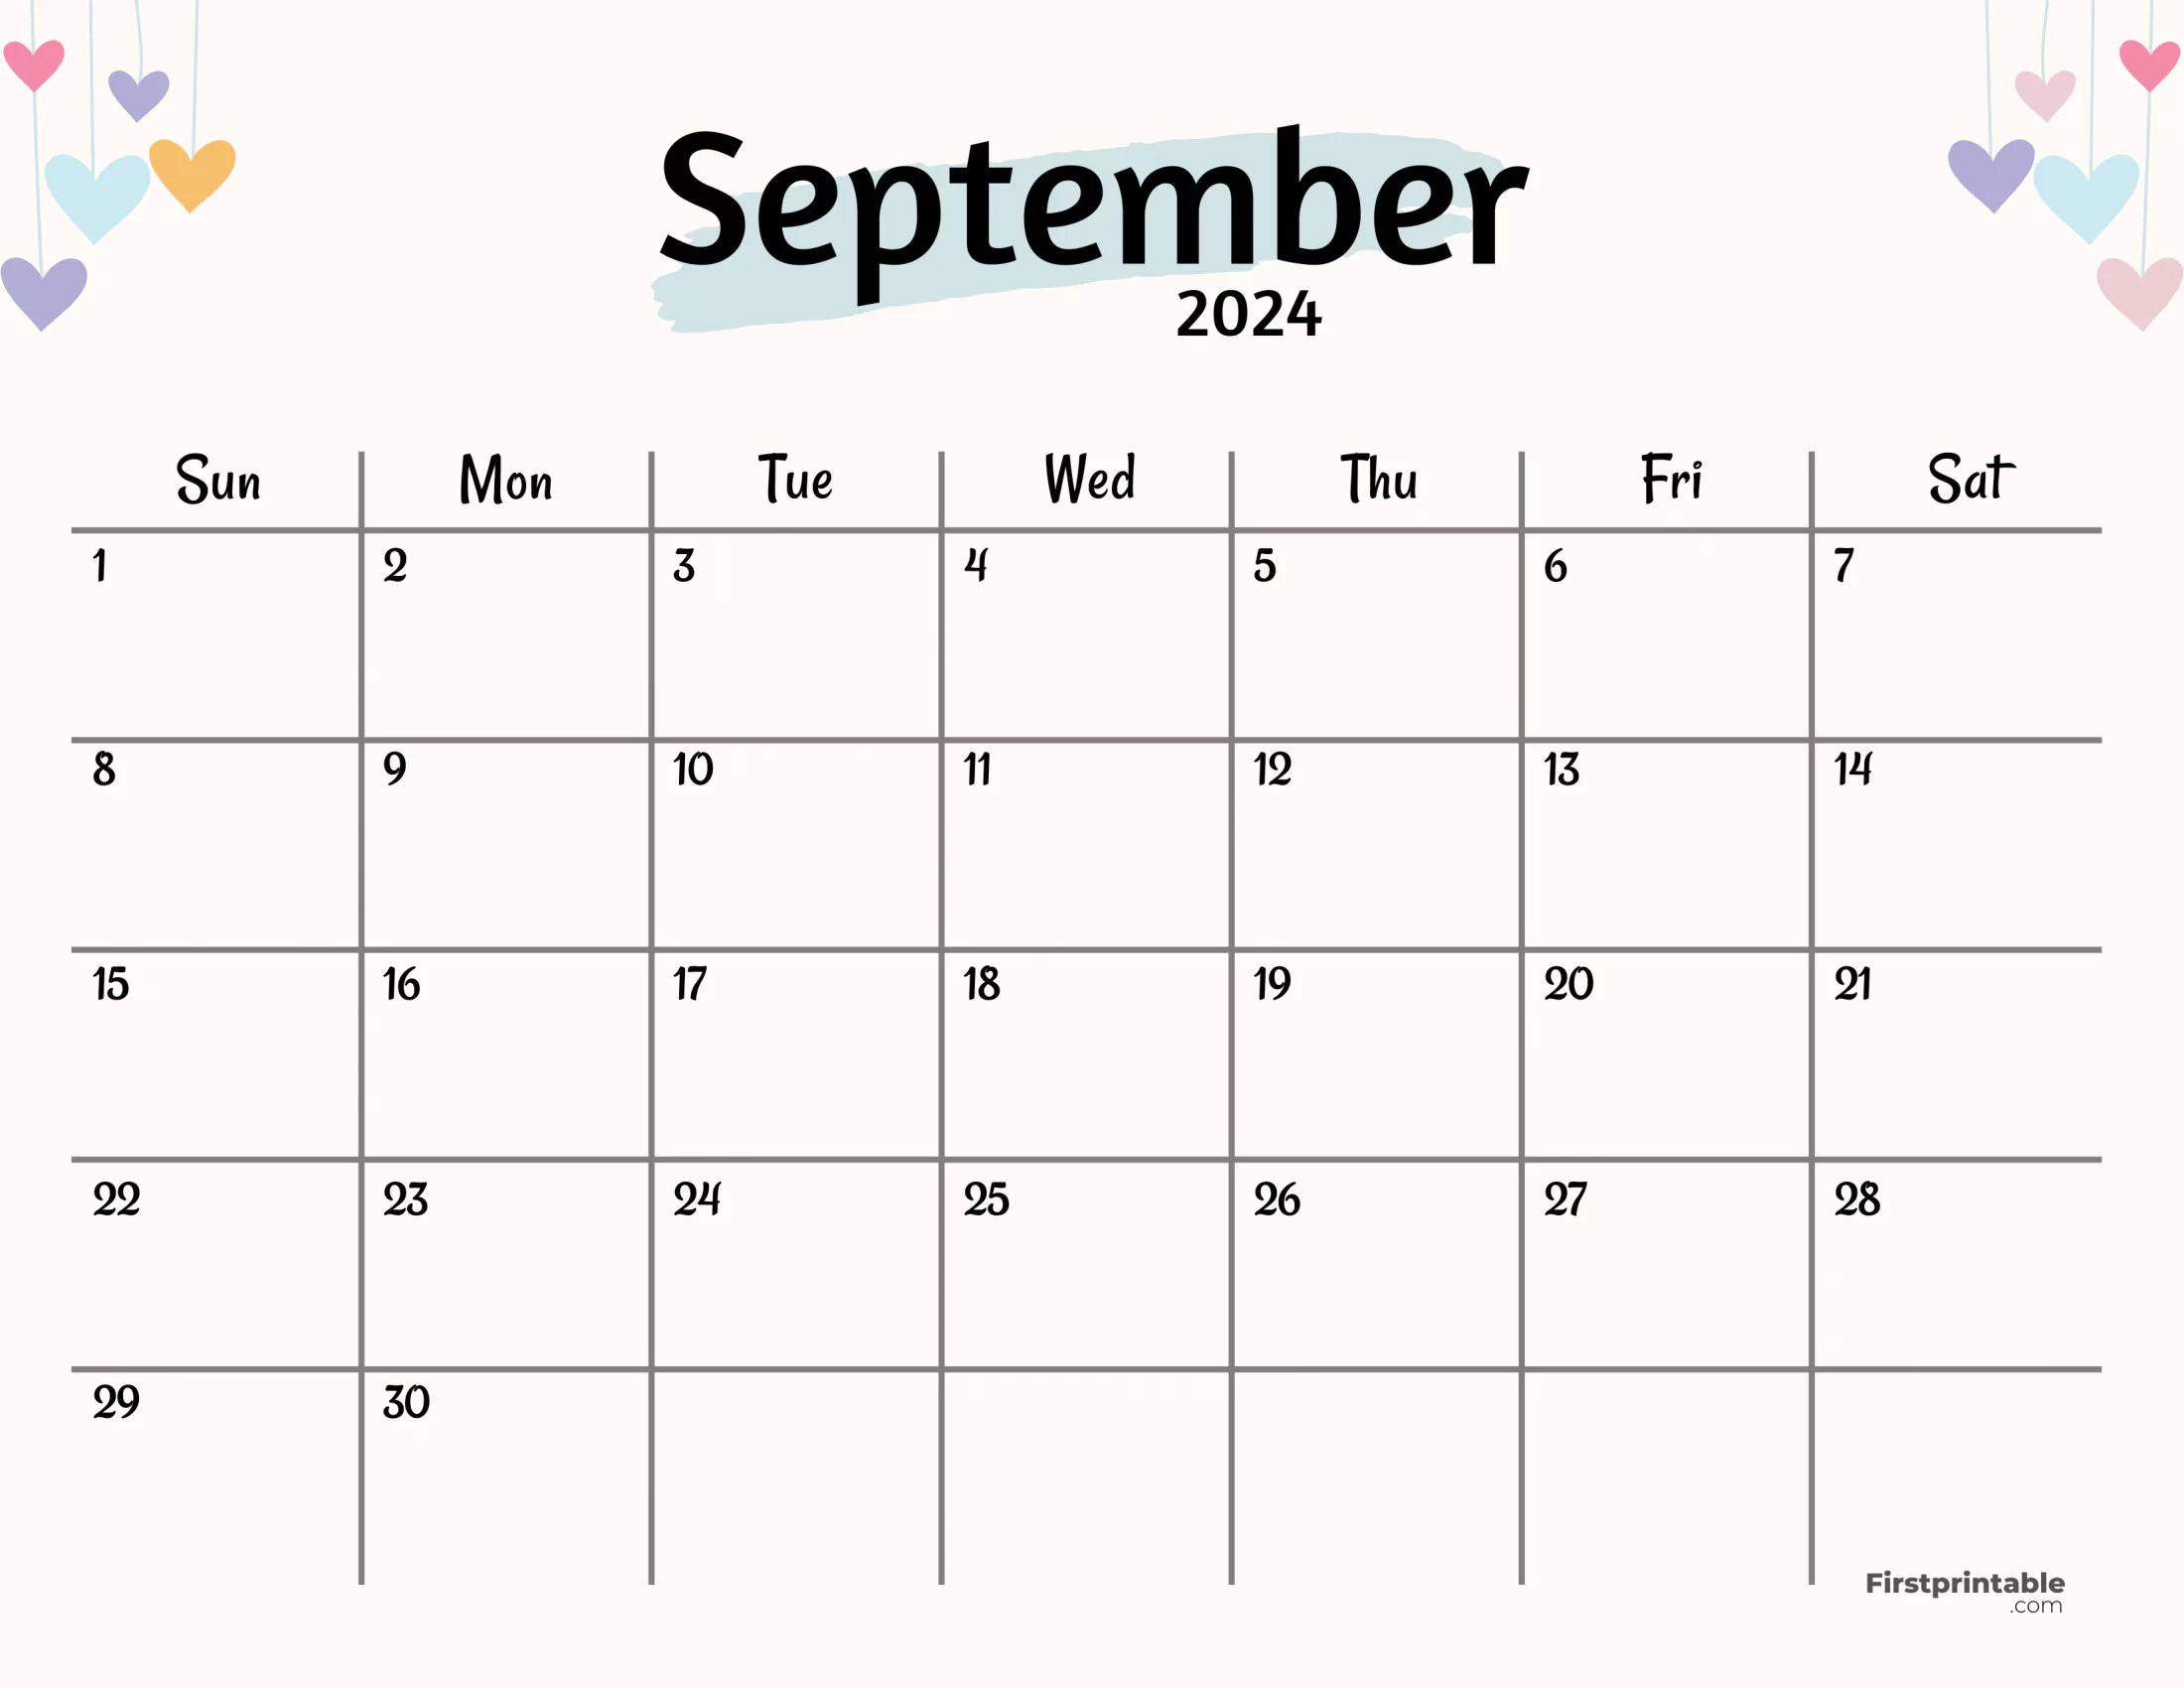 September Calendar 2024 template - Printable and Fillable